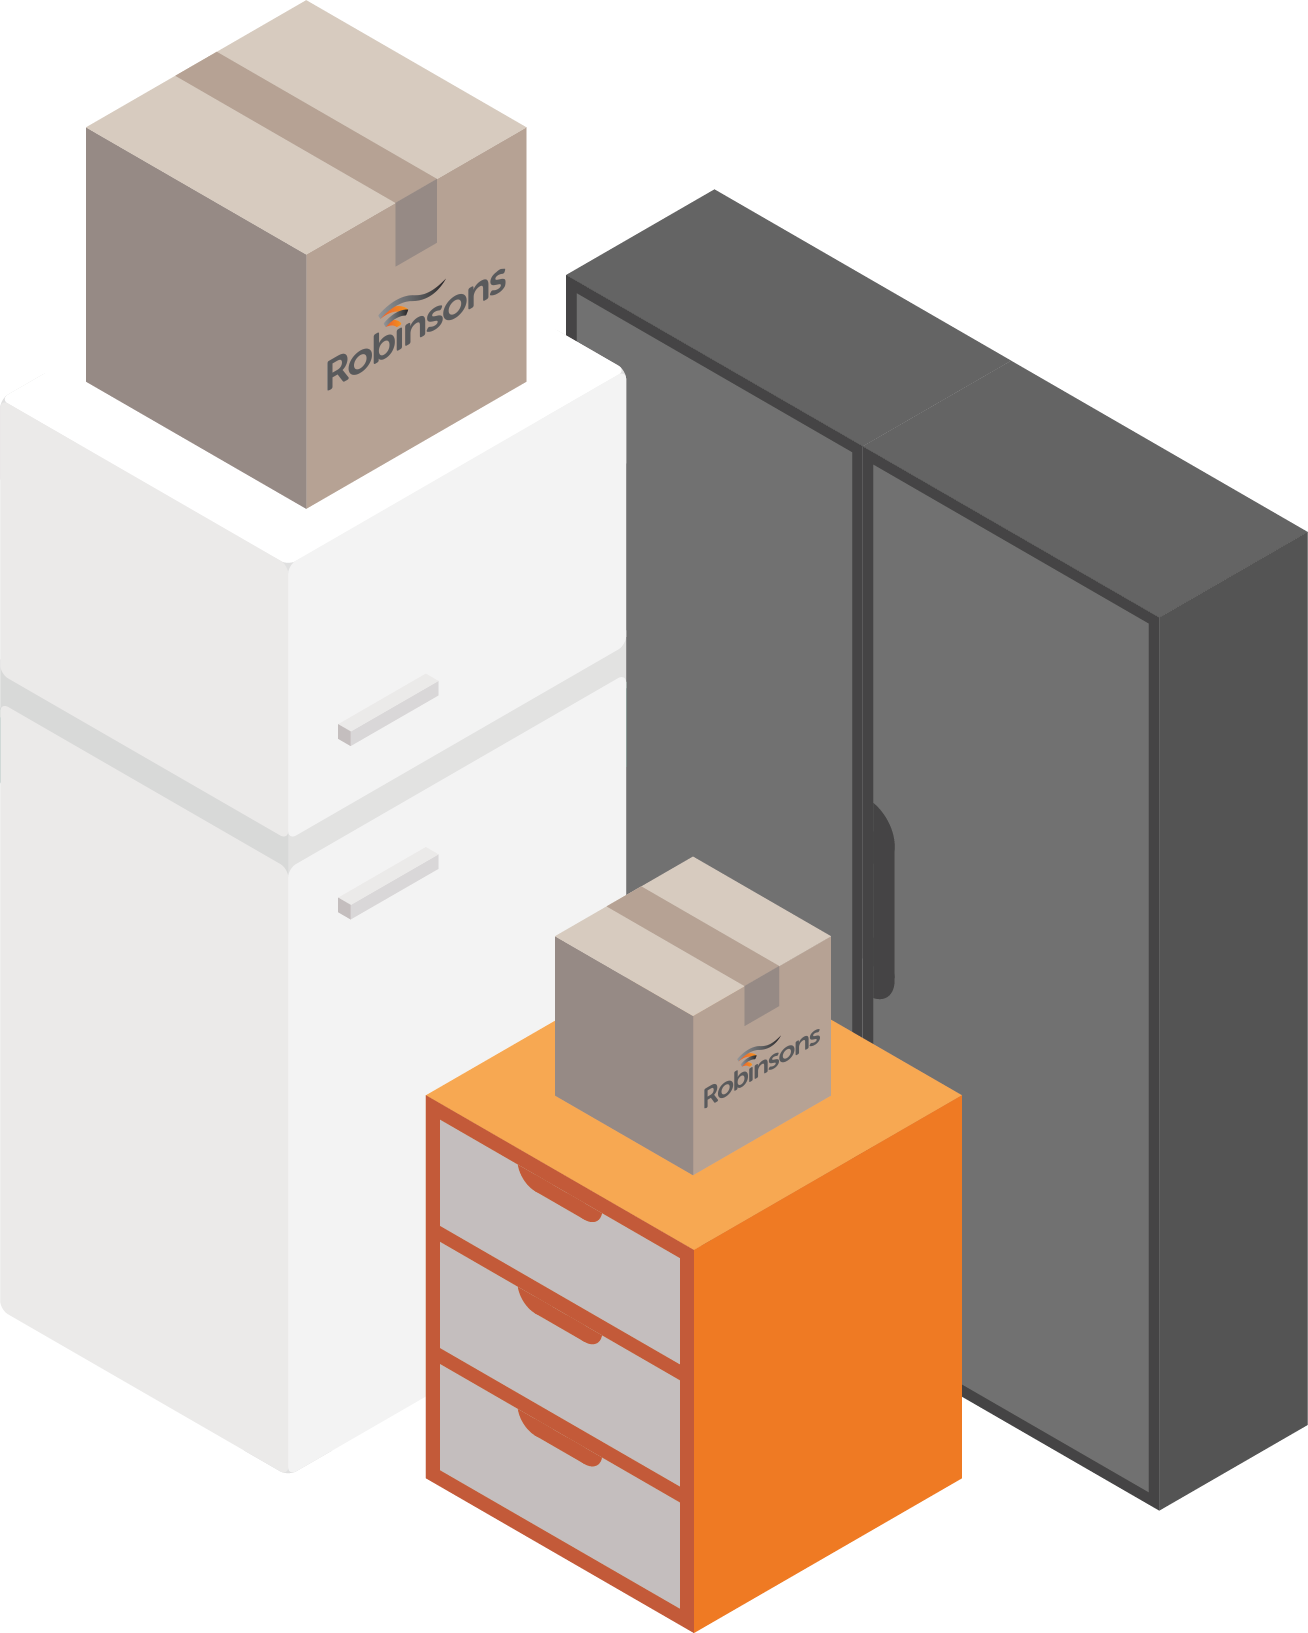 Medium - Personal Storage - Fridge, Cabinets